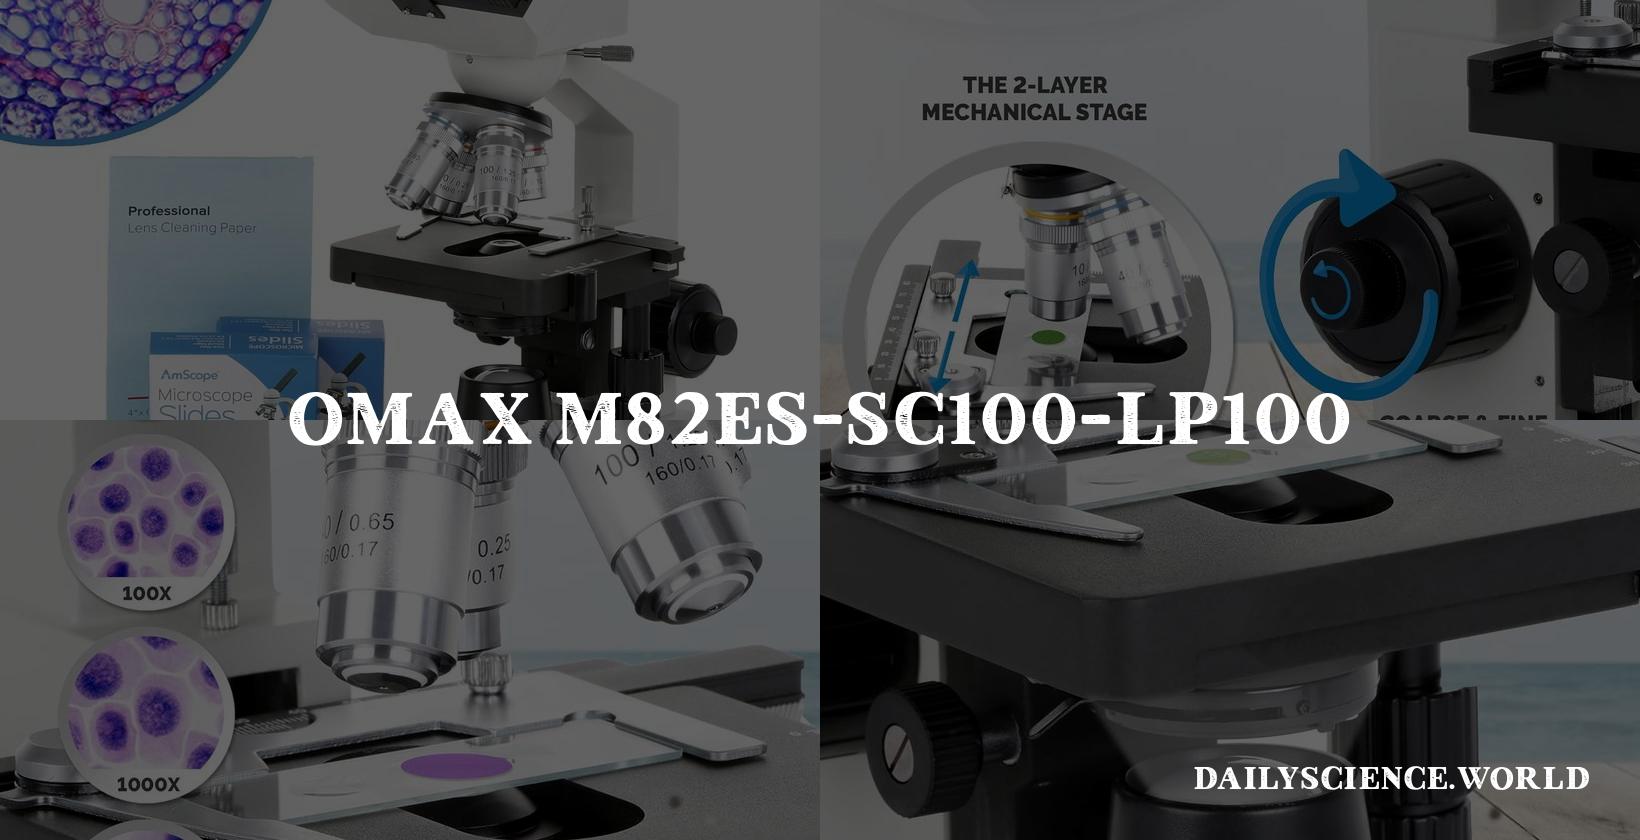 OMAX M82ES-SC100-LP100 Compound Lab Microscope